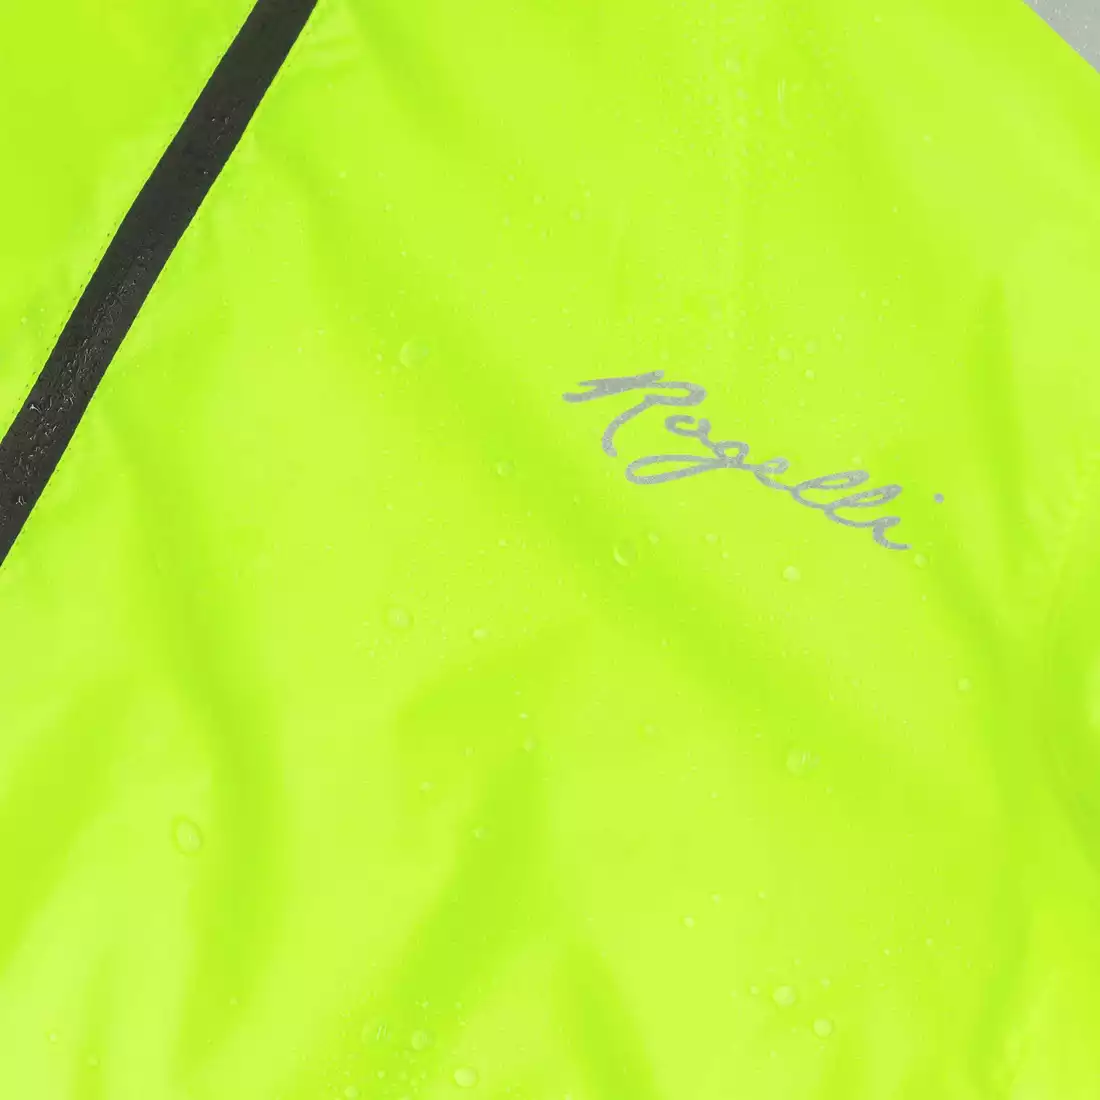 ROGELLI CORE dámska cyklistická bunda do dažďa žltý fluór